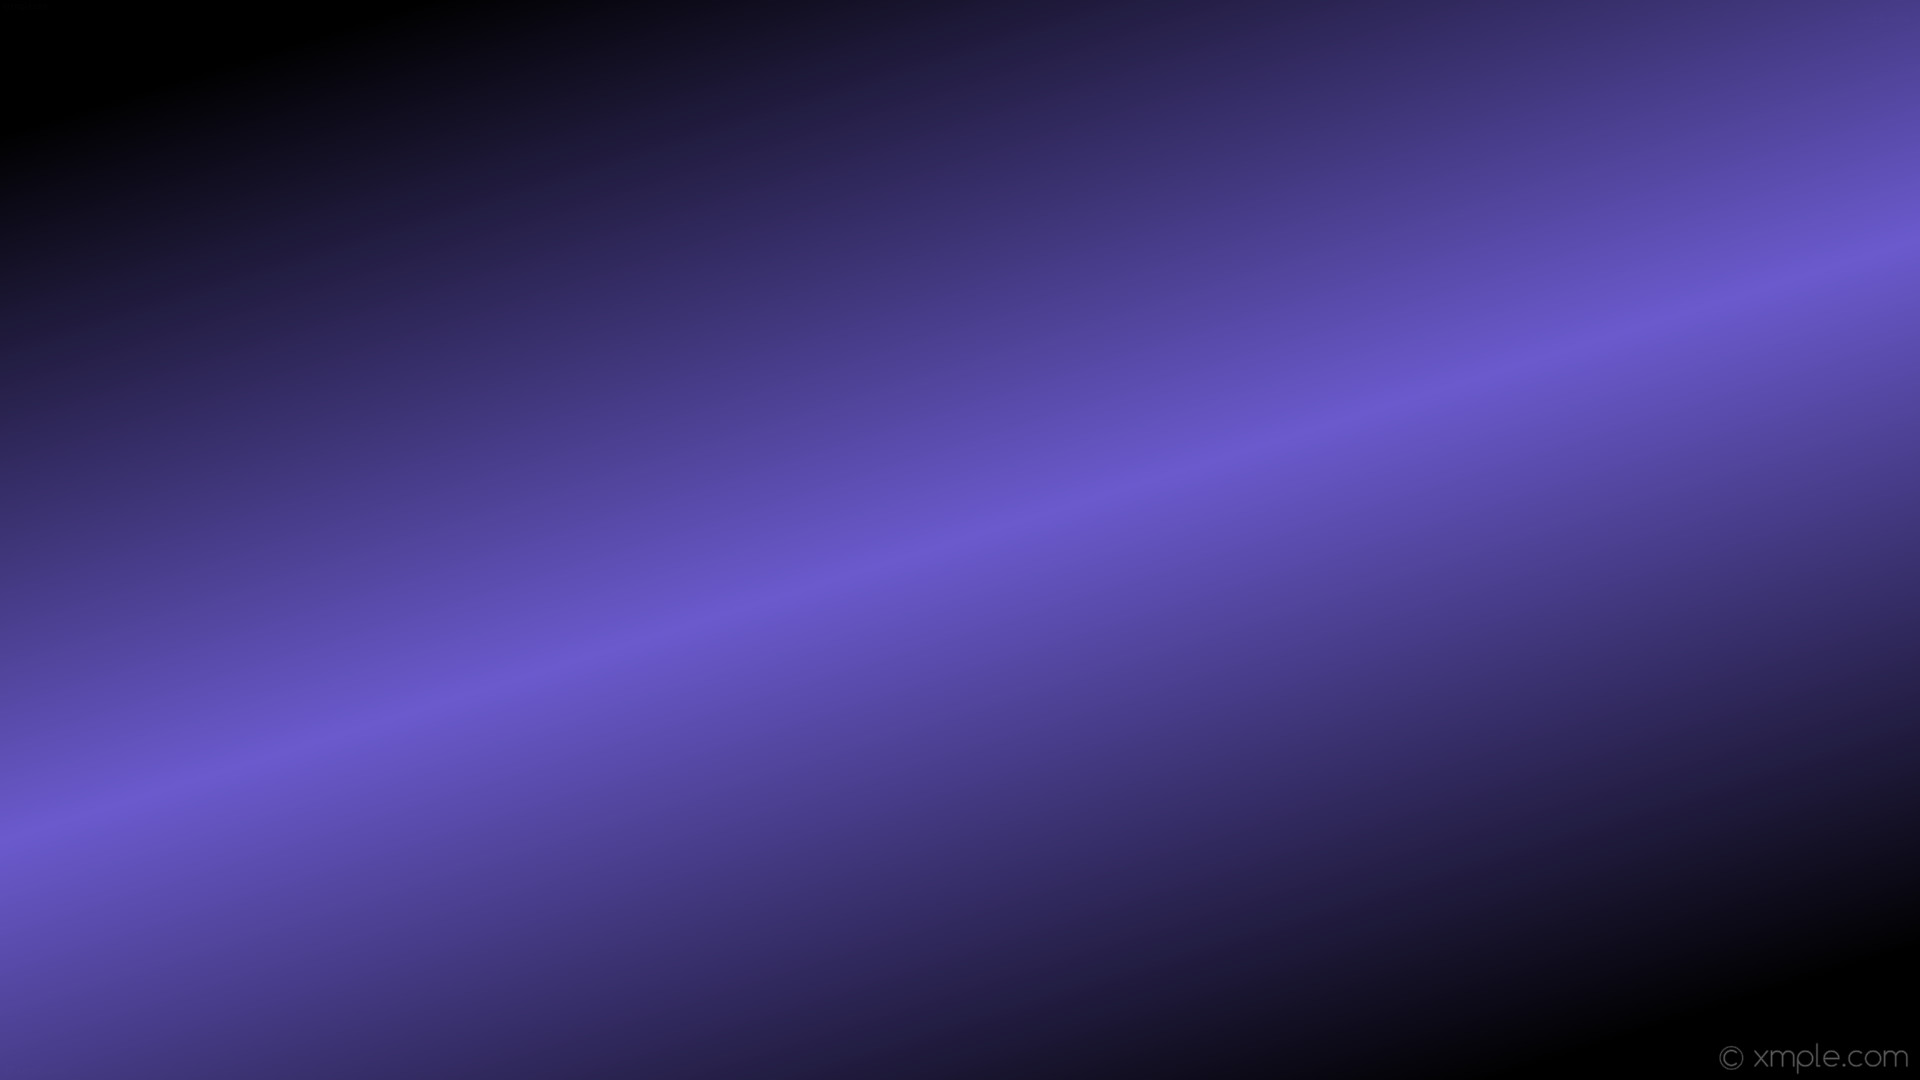 1920x1080 wallpaper linear black highlight purple gradient slate blue #000000 #6a5acd  135Â° 50%